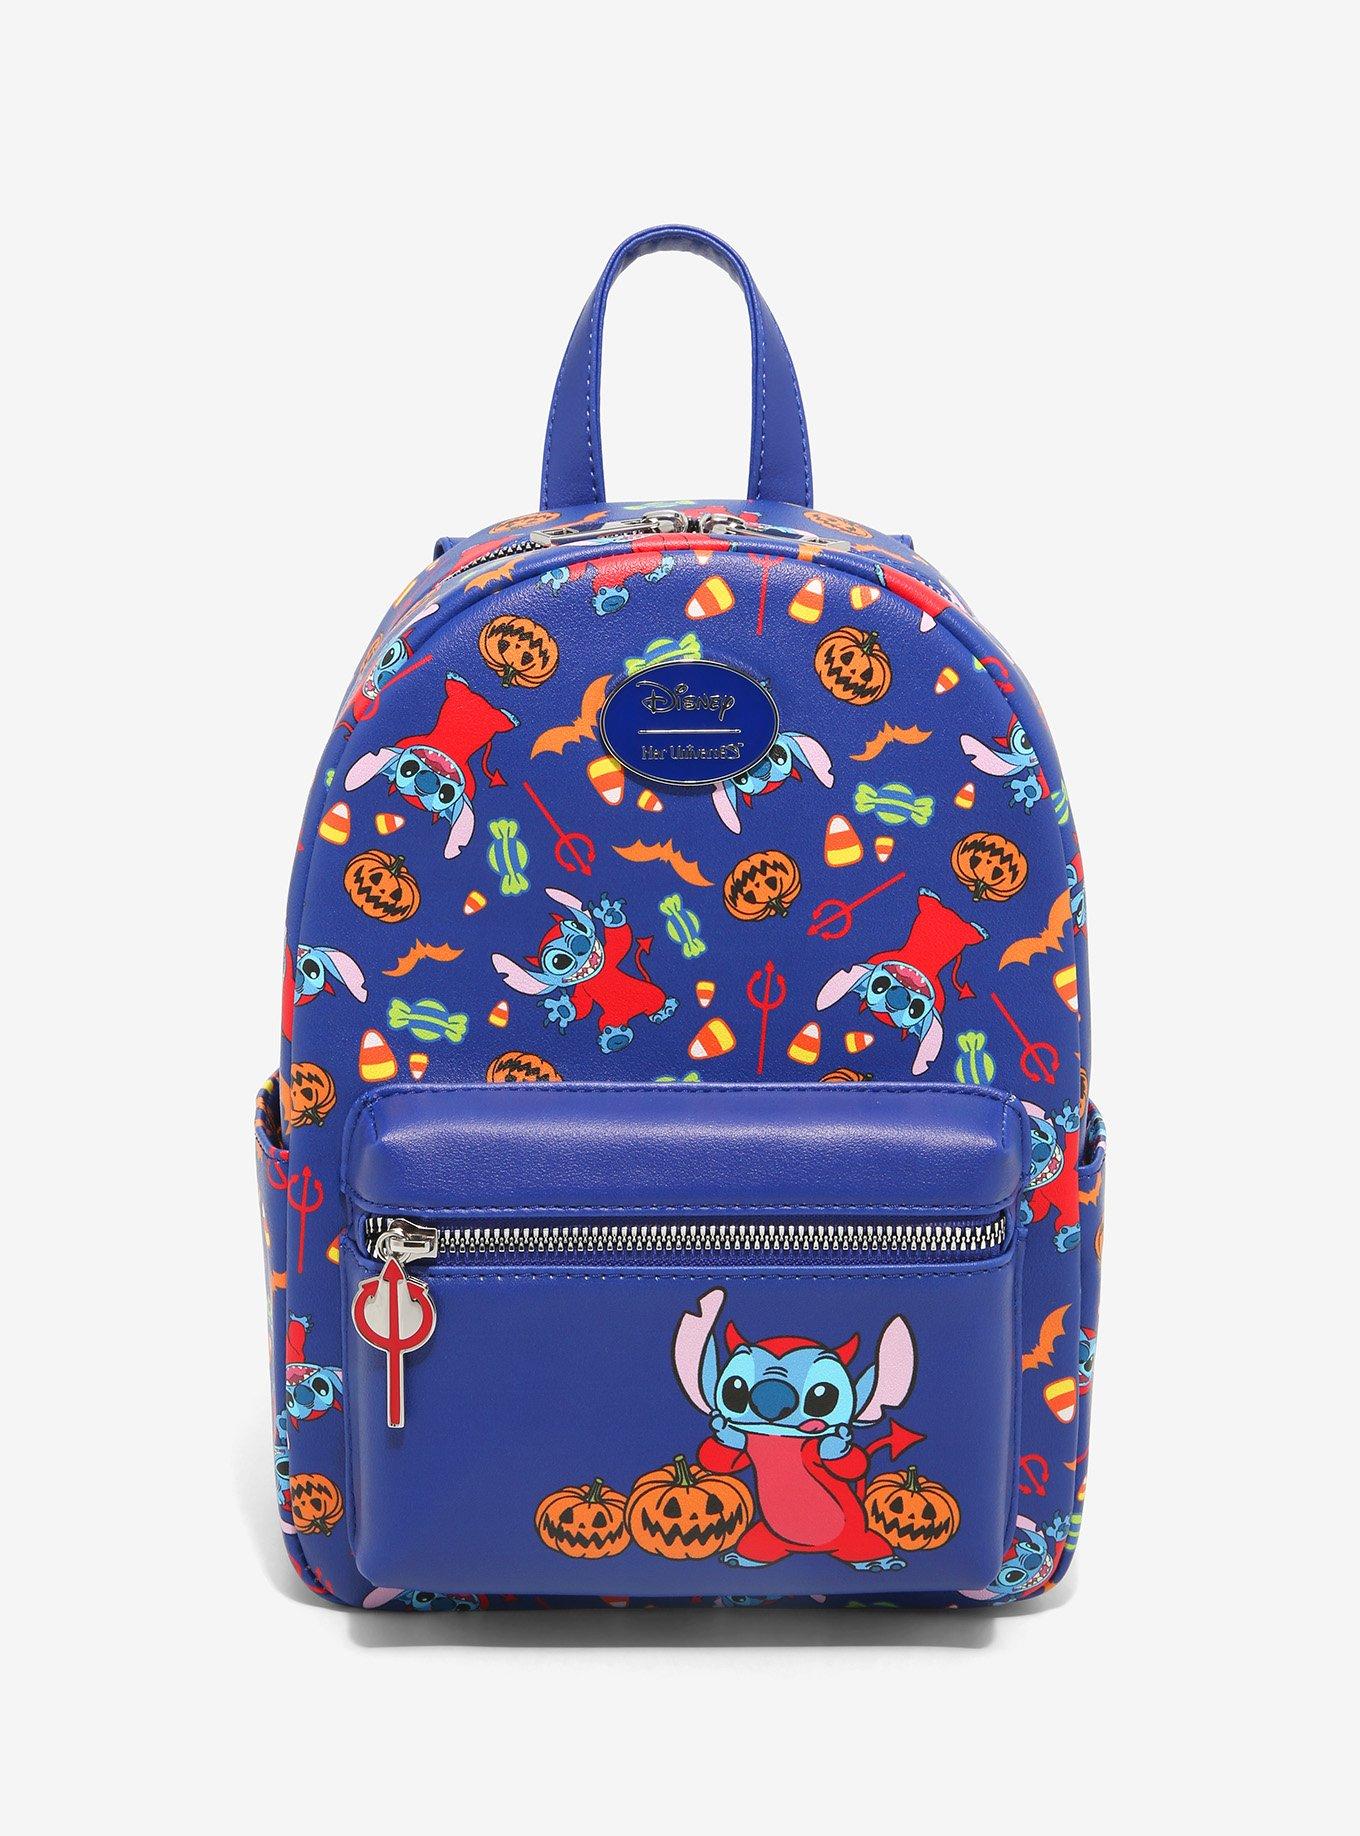 Meta Backpack in Disney's Halloween Town